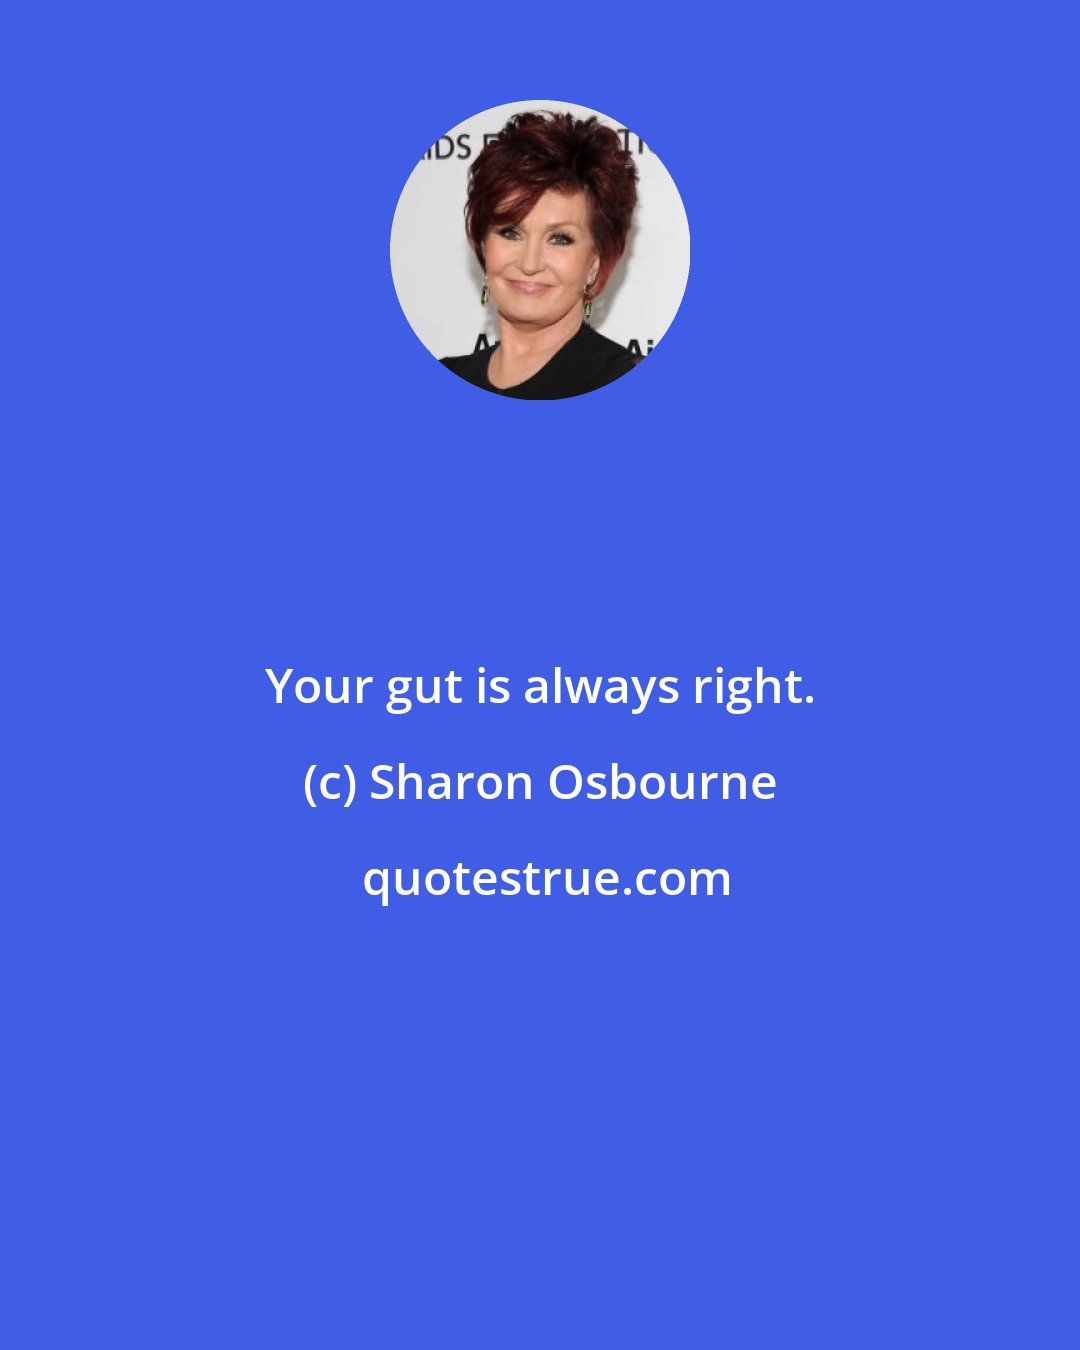 Sharon Osbourne: Your gut is always right.